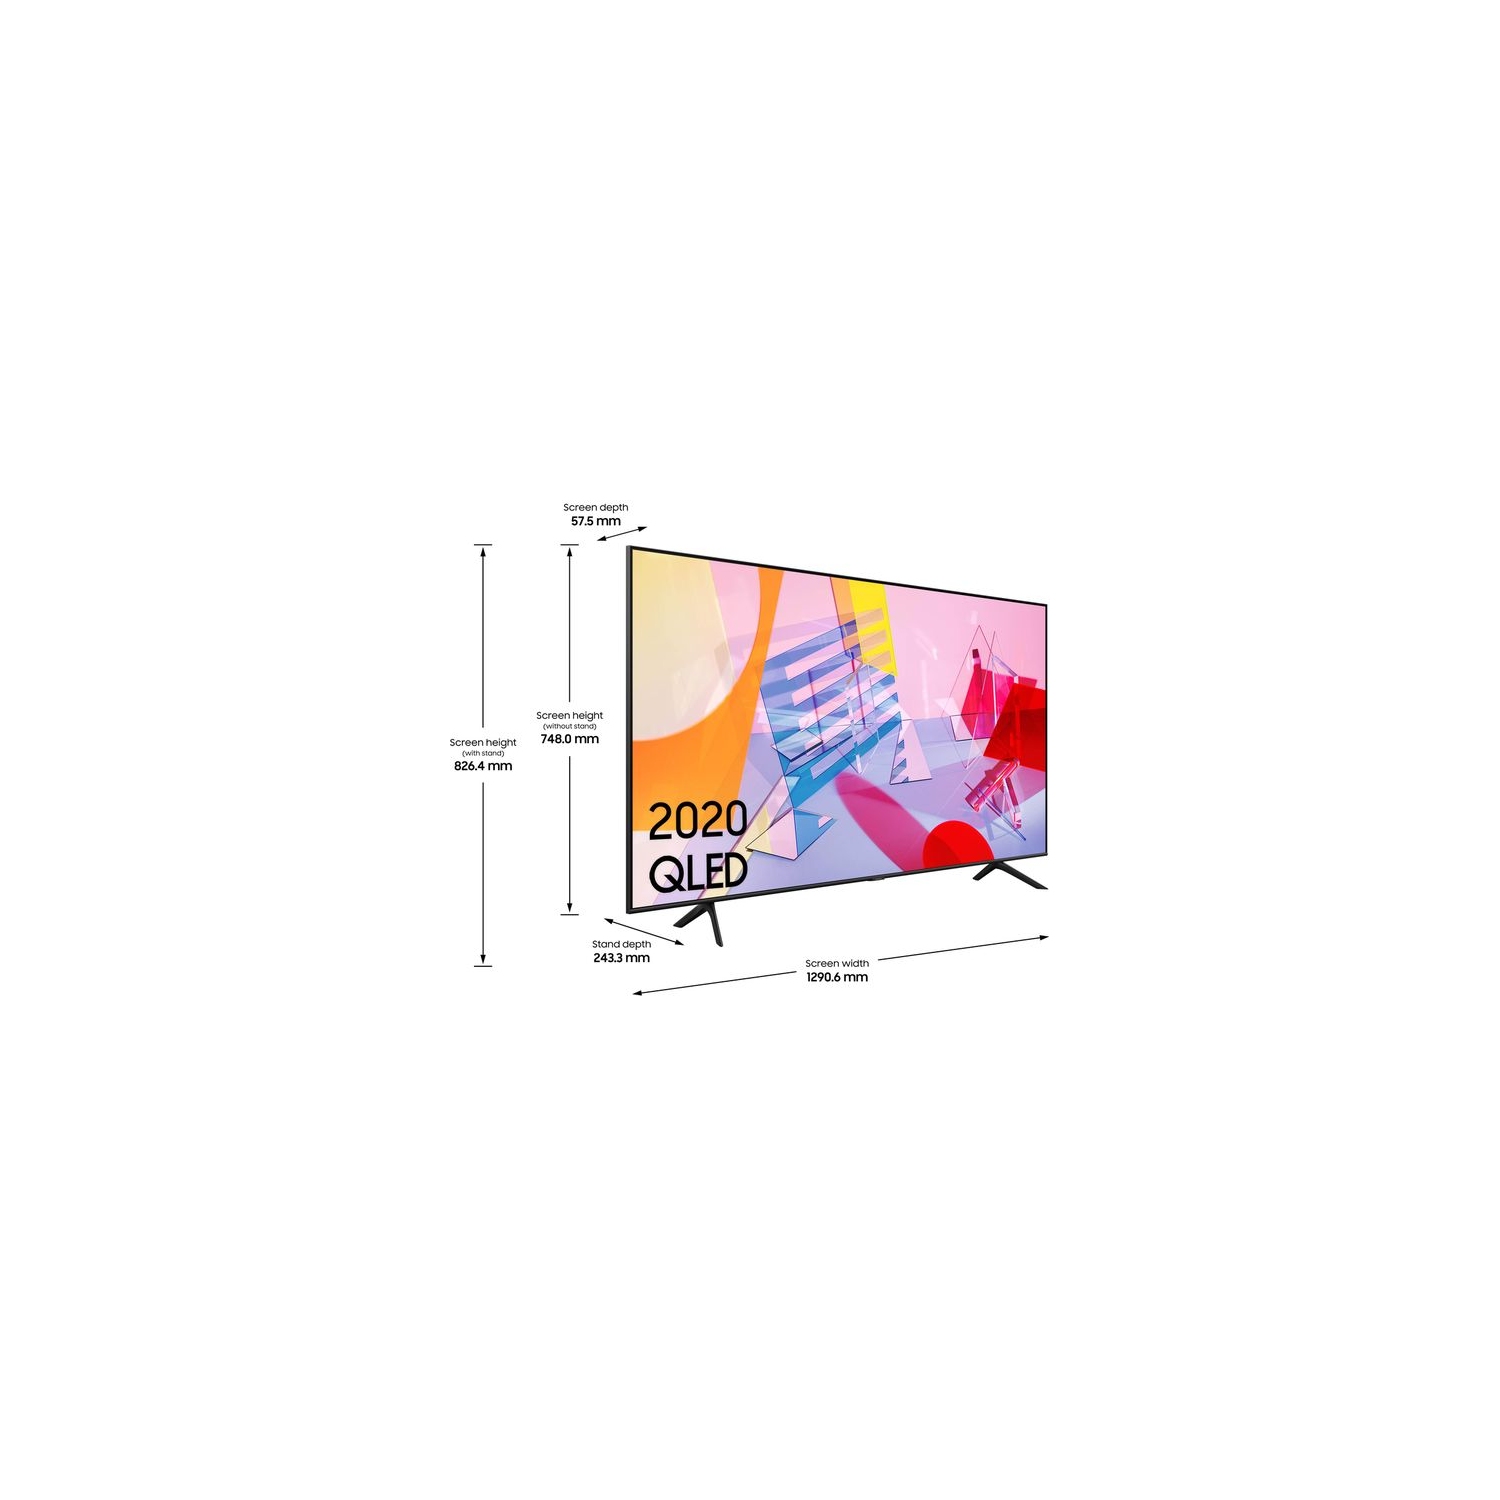 Samsung QE58Q60T 58" Smart 4K Ultra HD HDR QLED TV with Bixby, Alexa & Google Assistant - 2